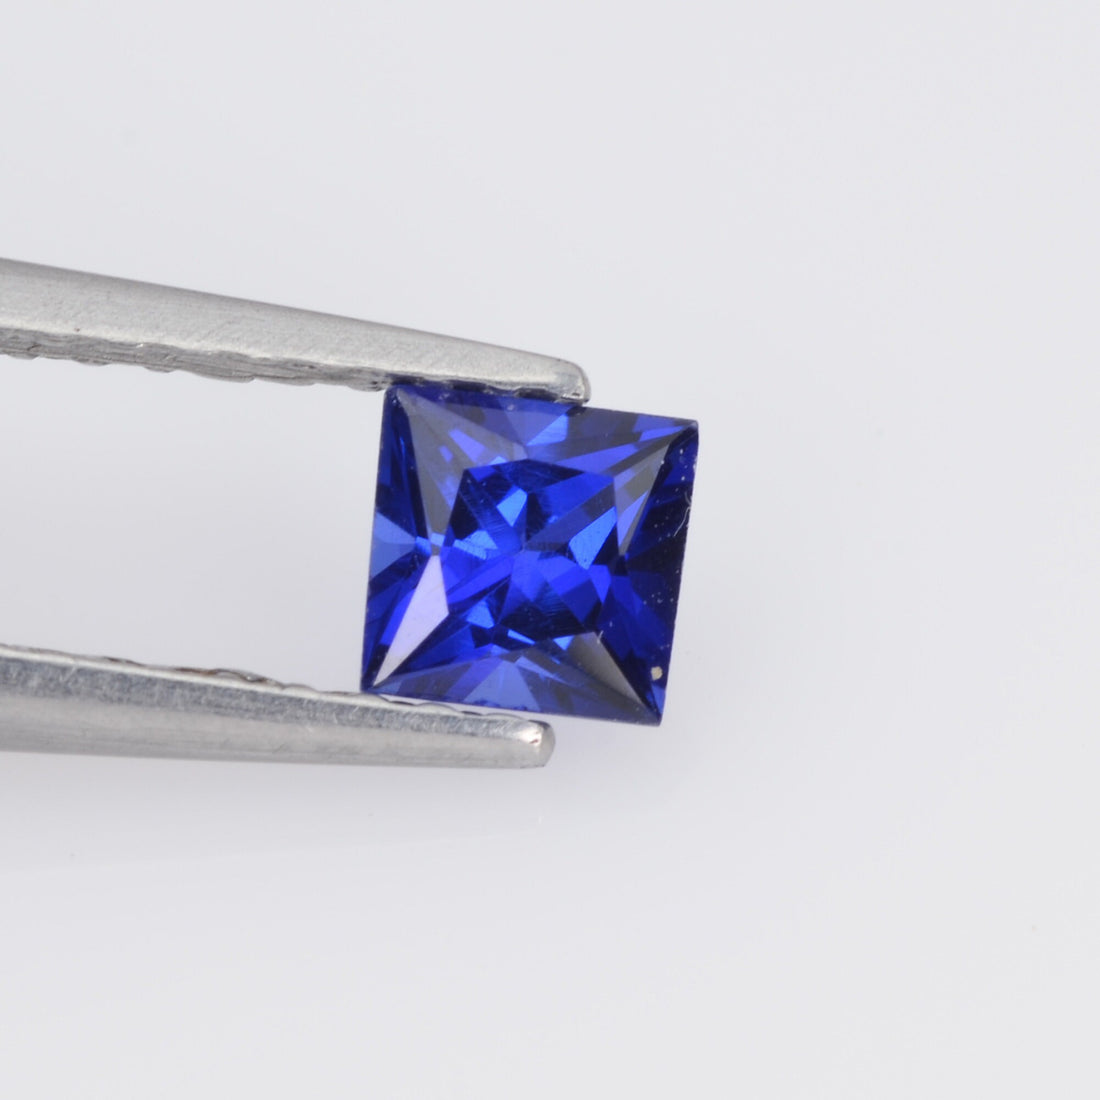 3.2-4.0 MM Natural Princess Cut Blue Sapphire Loose Gemstone